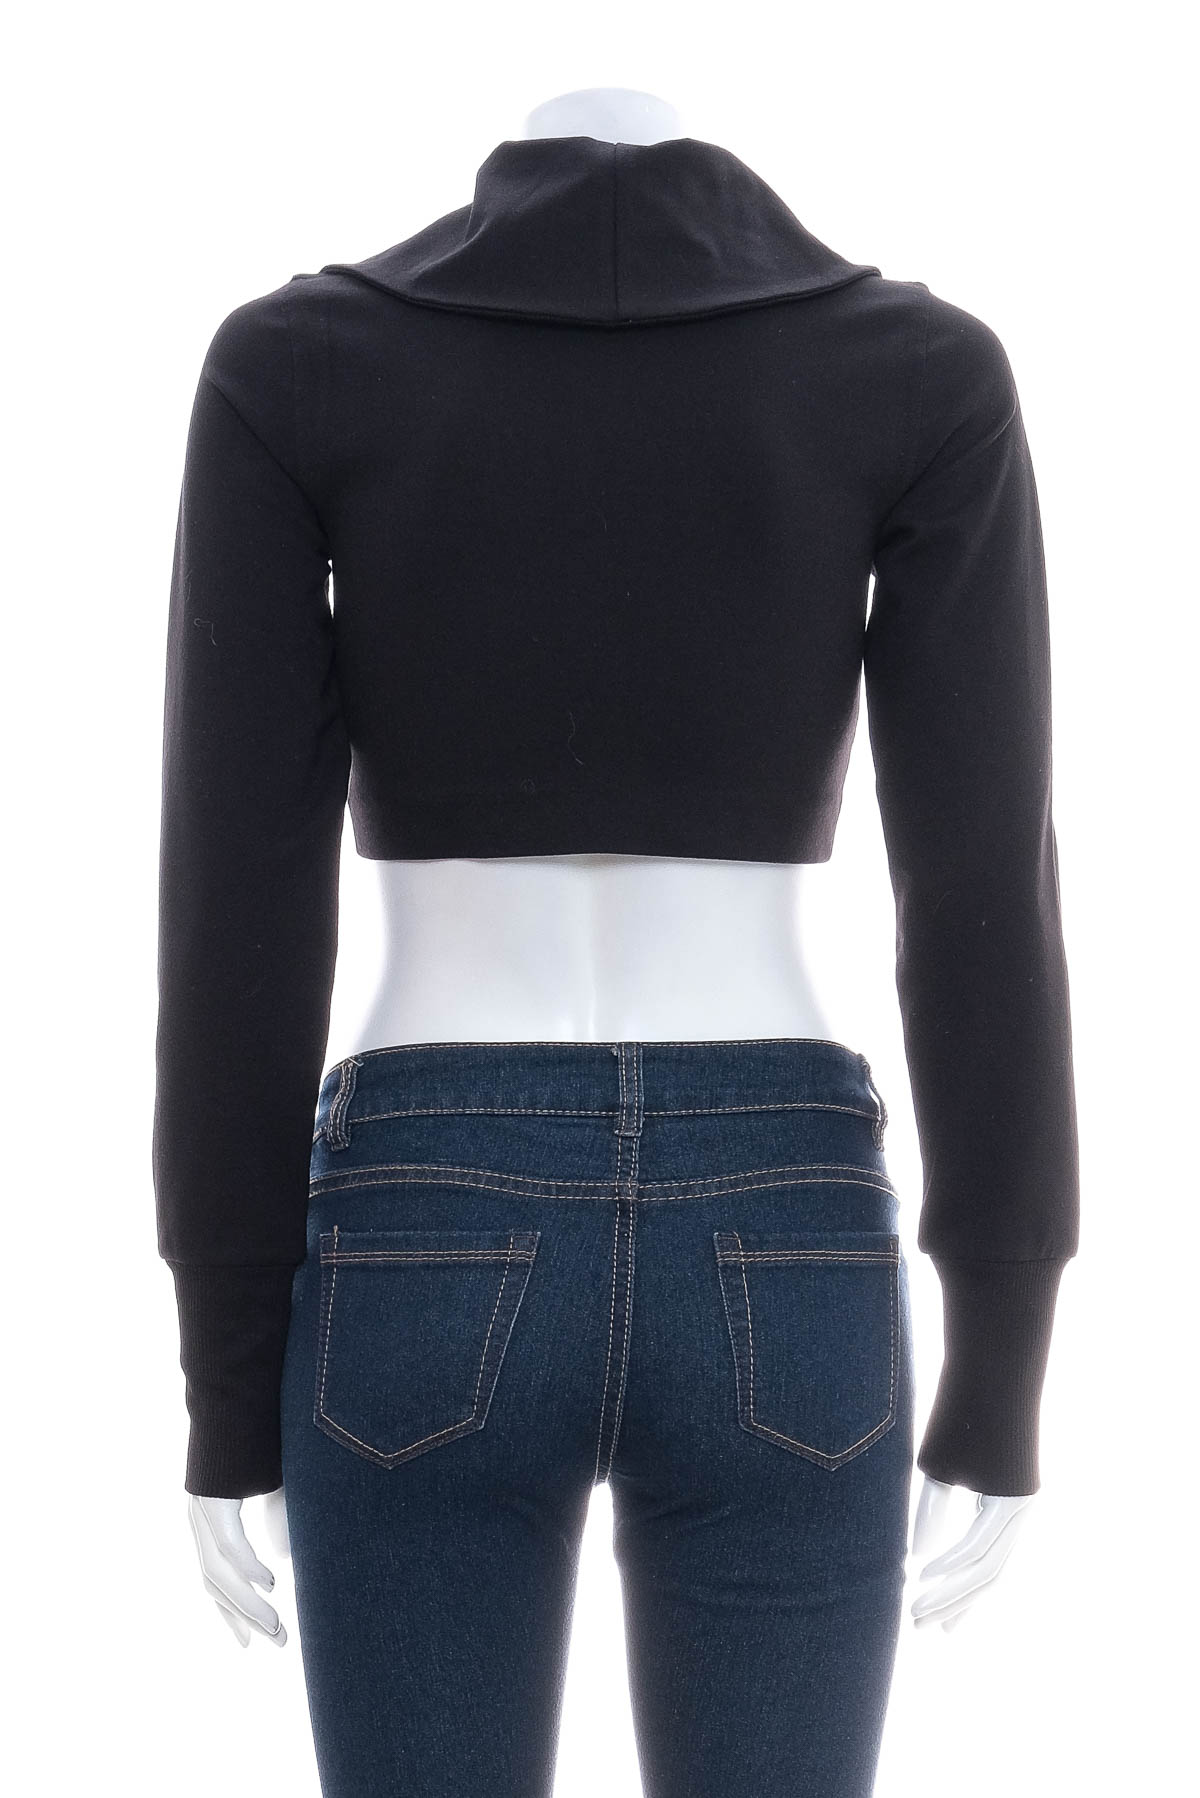 Women's blouse - Calvin Klein Jeans - 1